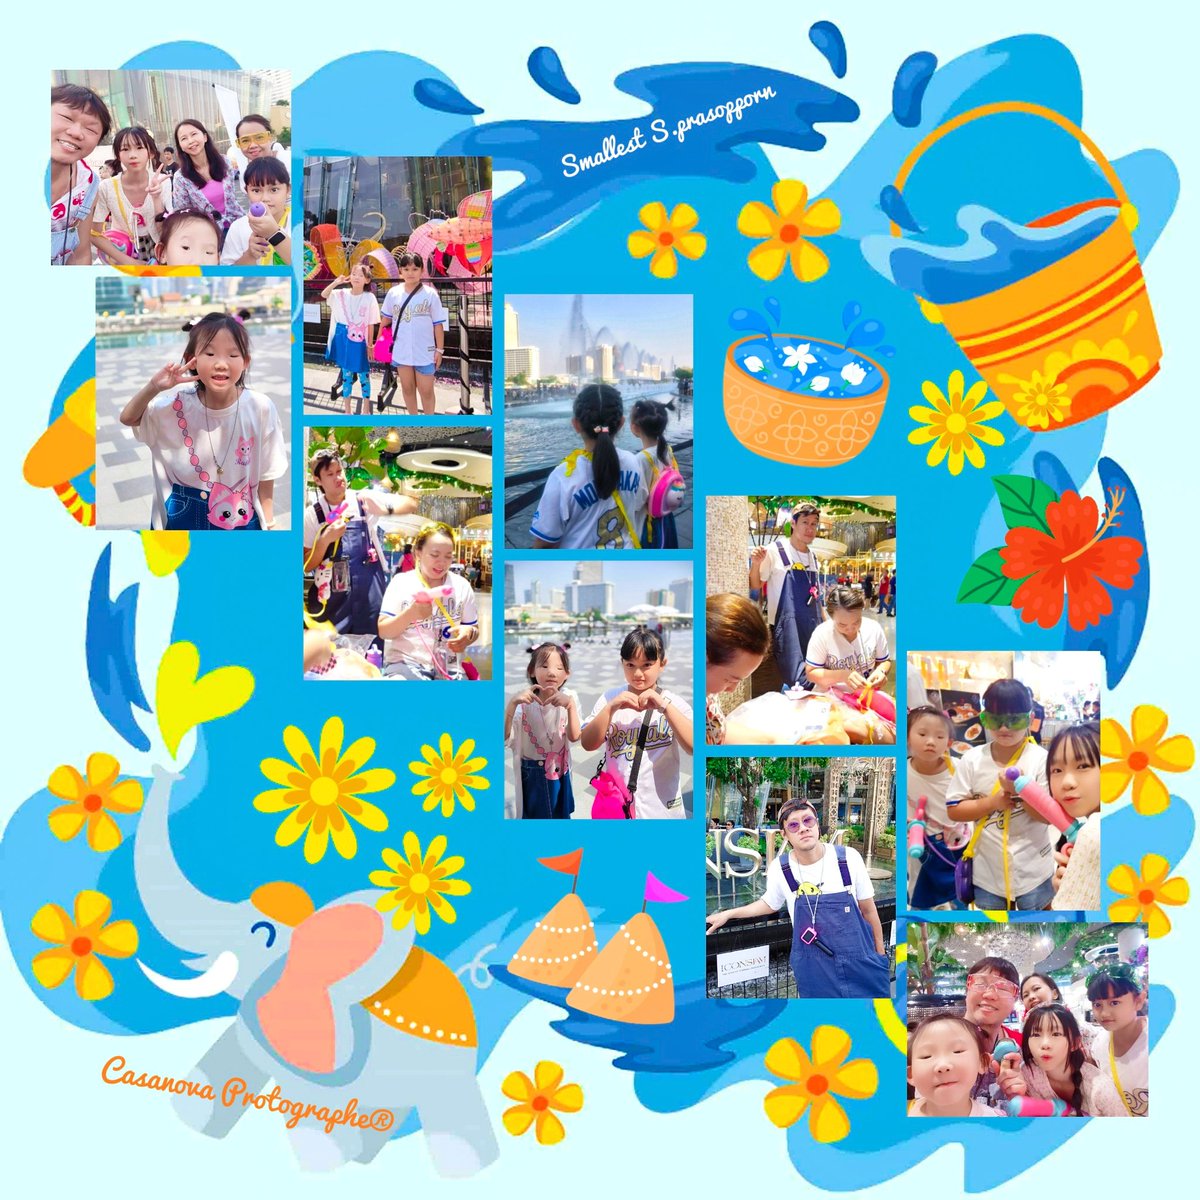 My Family & My Friends..
Meeting My Friends Songkran..
Photo : Smallest S.Prasopporn..
Photo : Casanova Protographer..
#Overalls #SugarDadStyle
#IconSiam #Songkran2024
#CasanovaIconArtBangkok